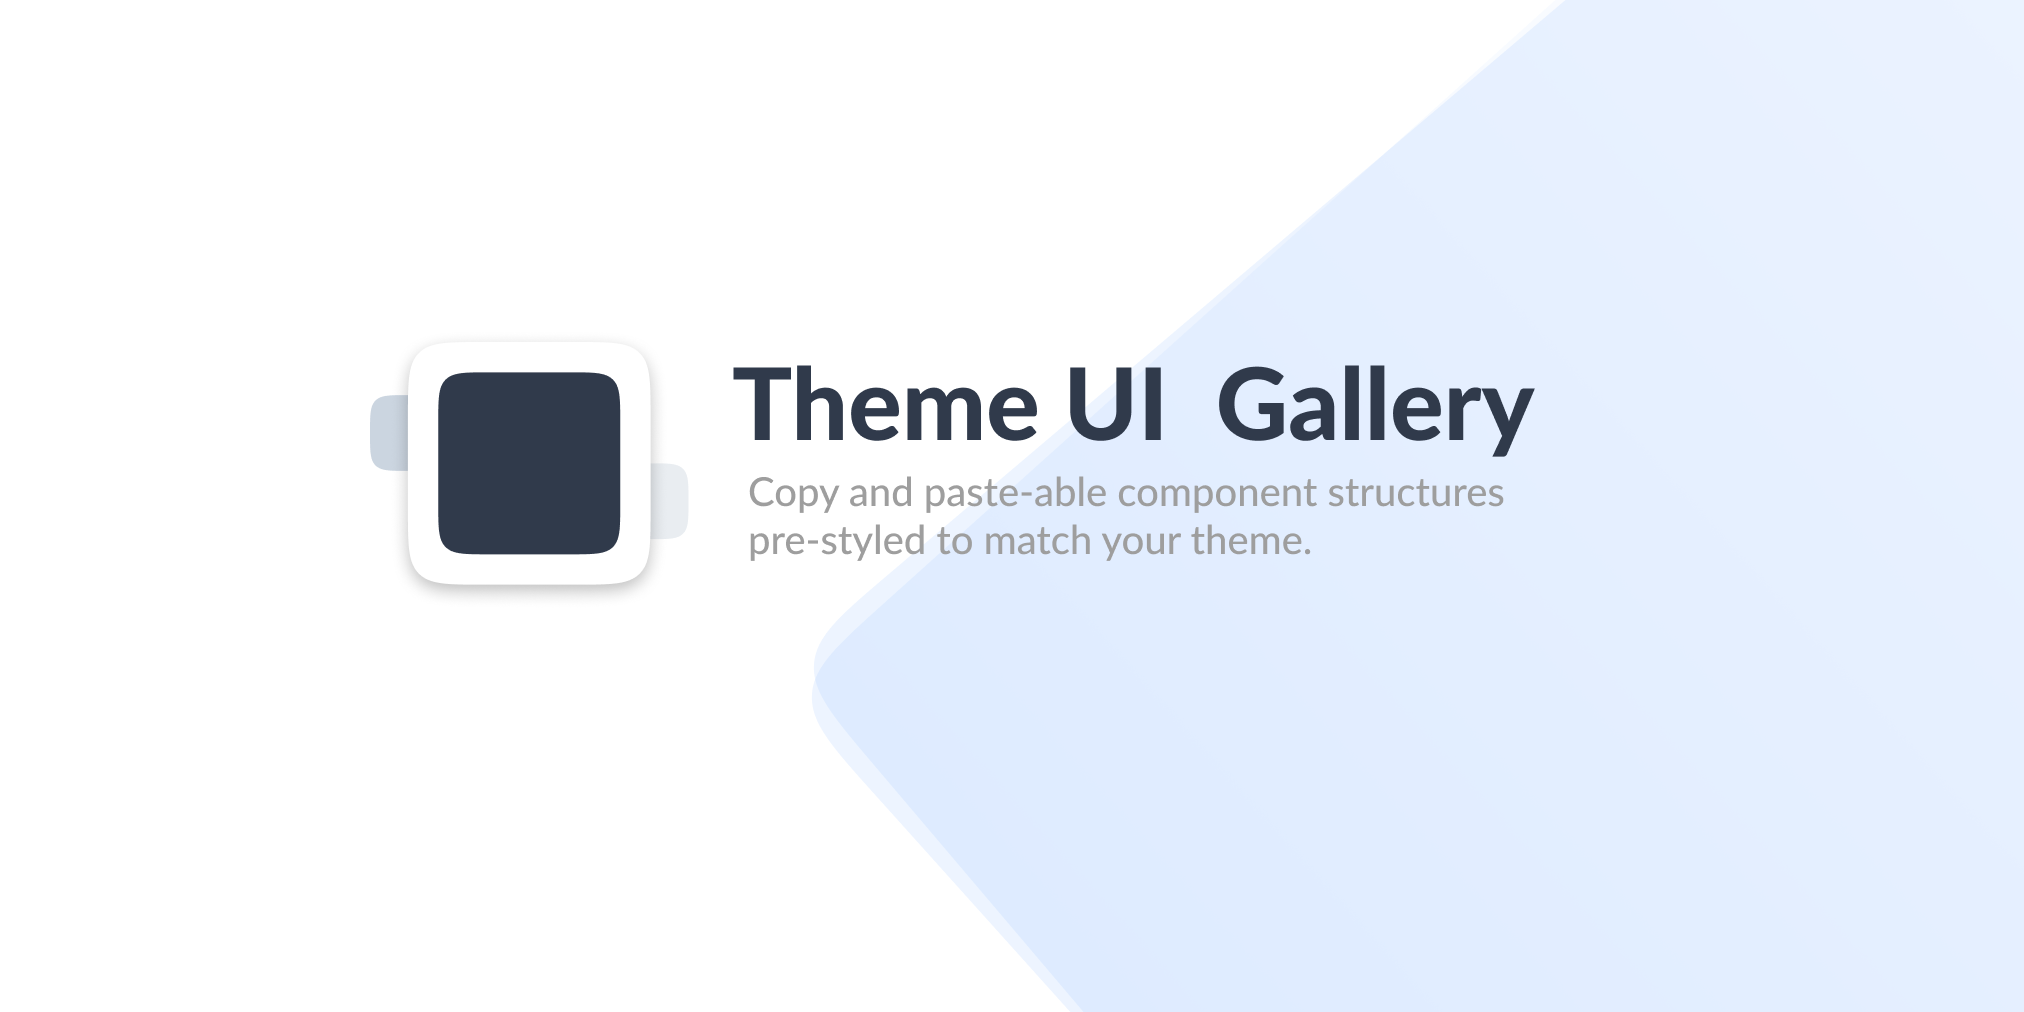 Theme UI Gallery